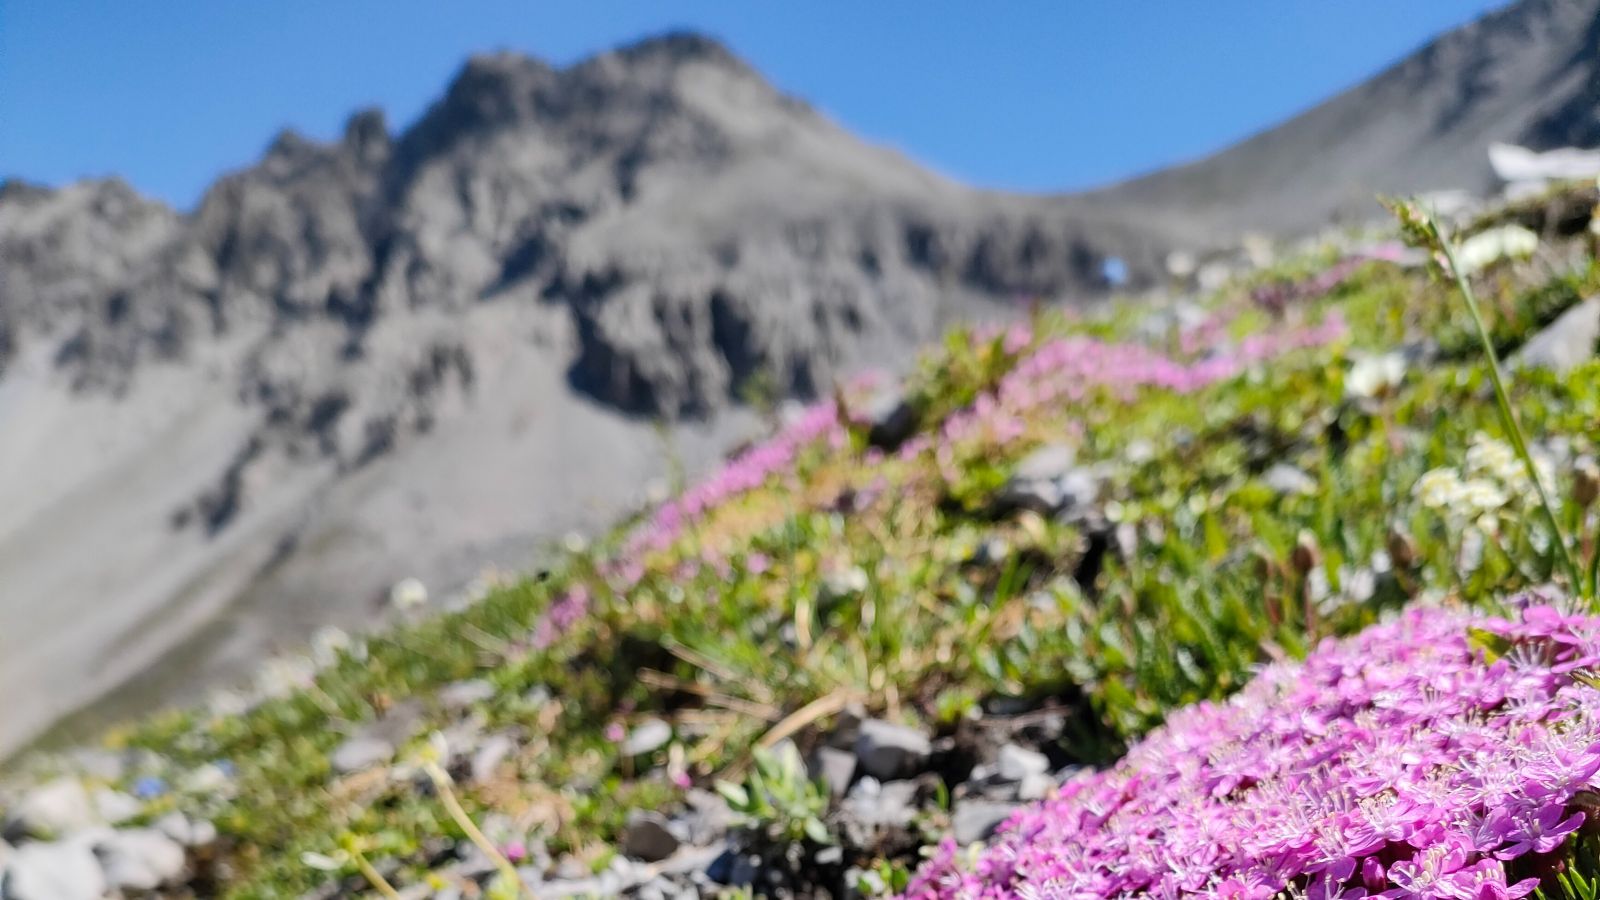 Alpine plants in bloom